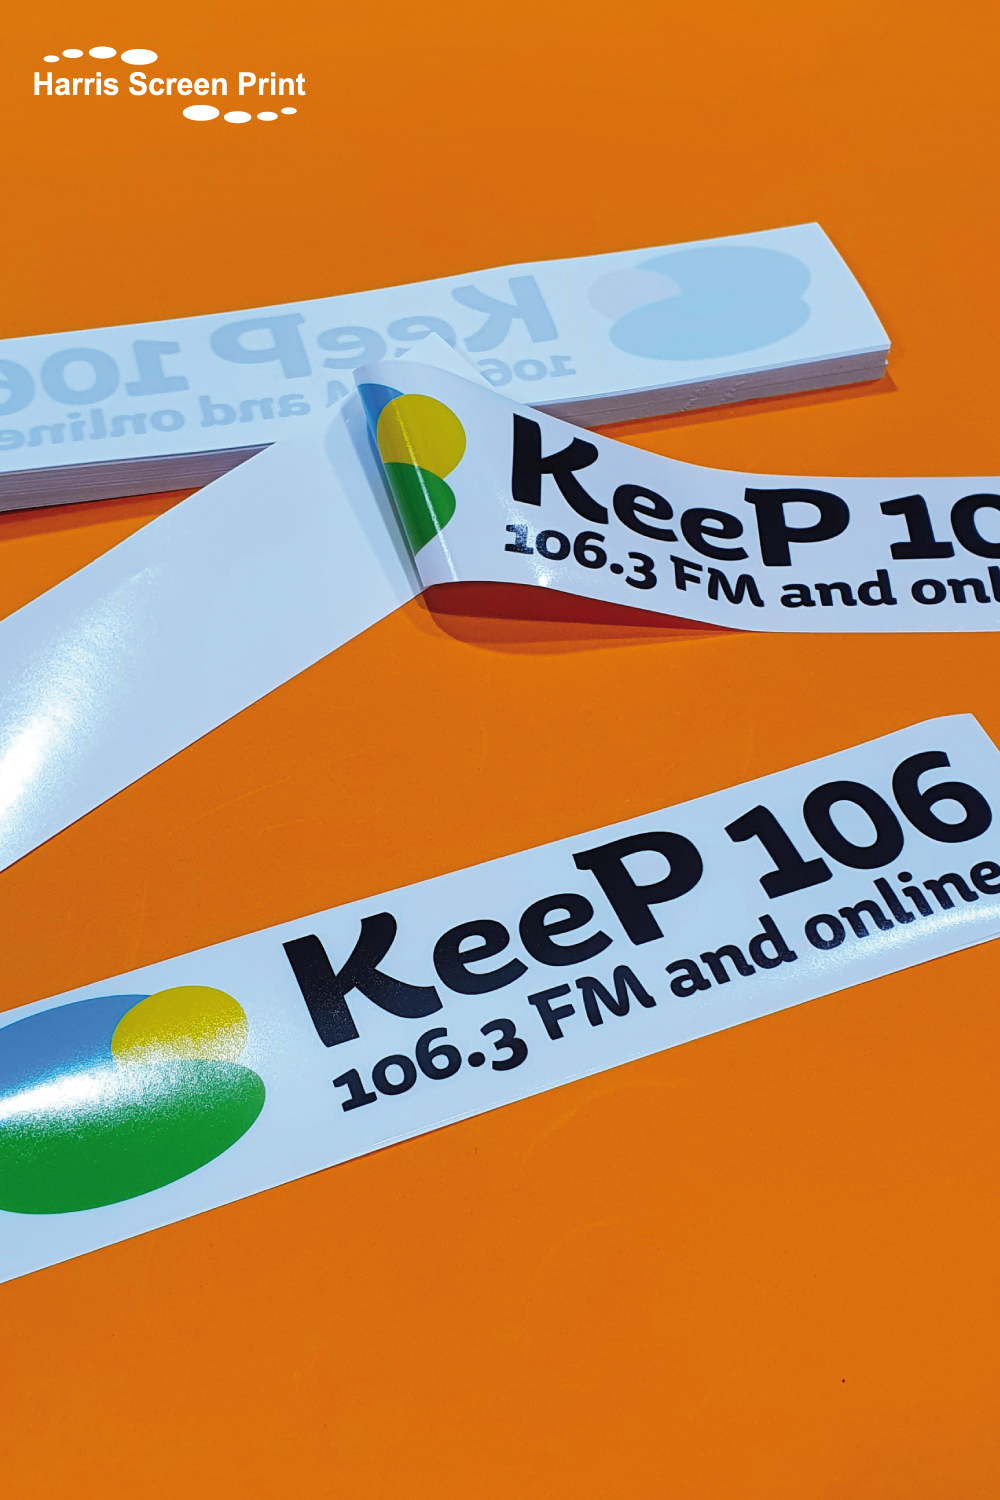 Radio Station Car Window Stickers printed for Keep 106.3